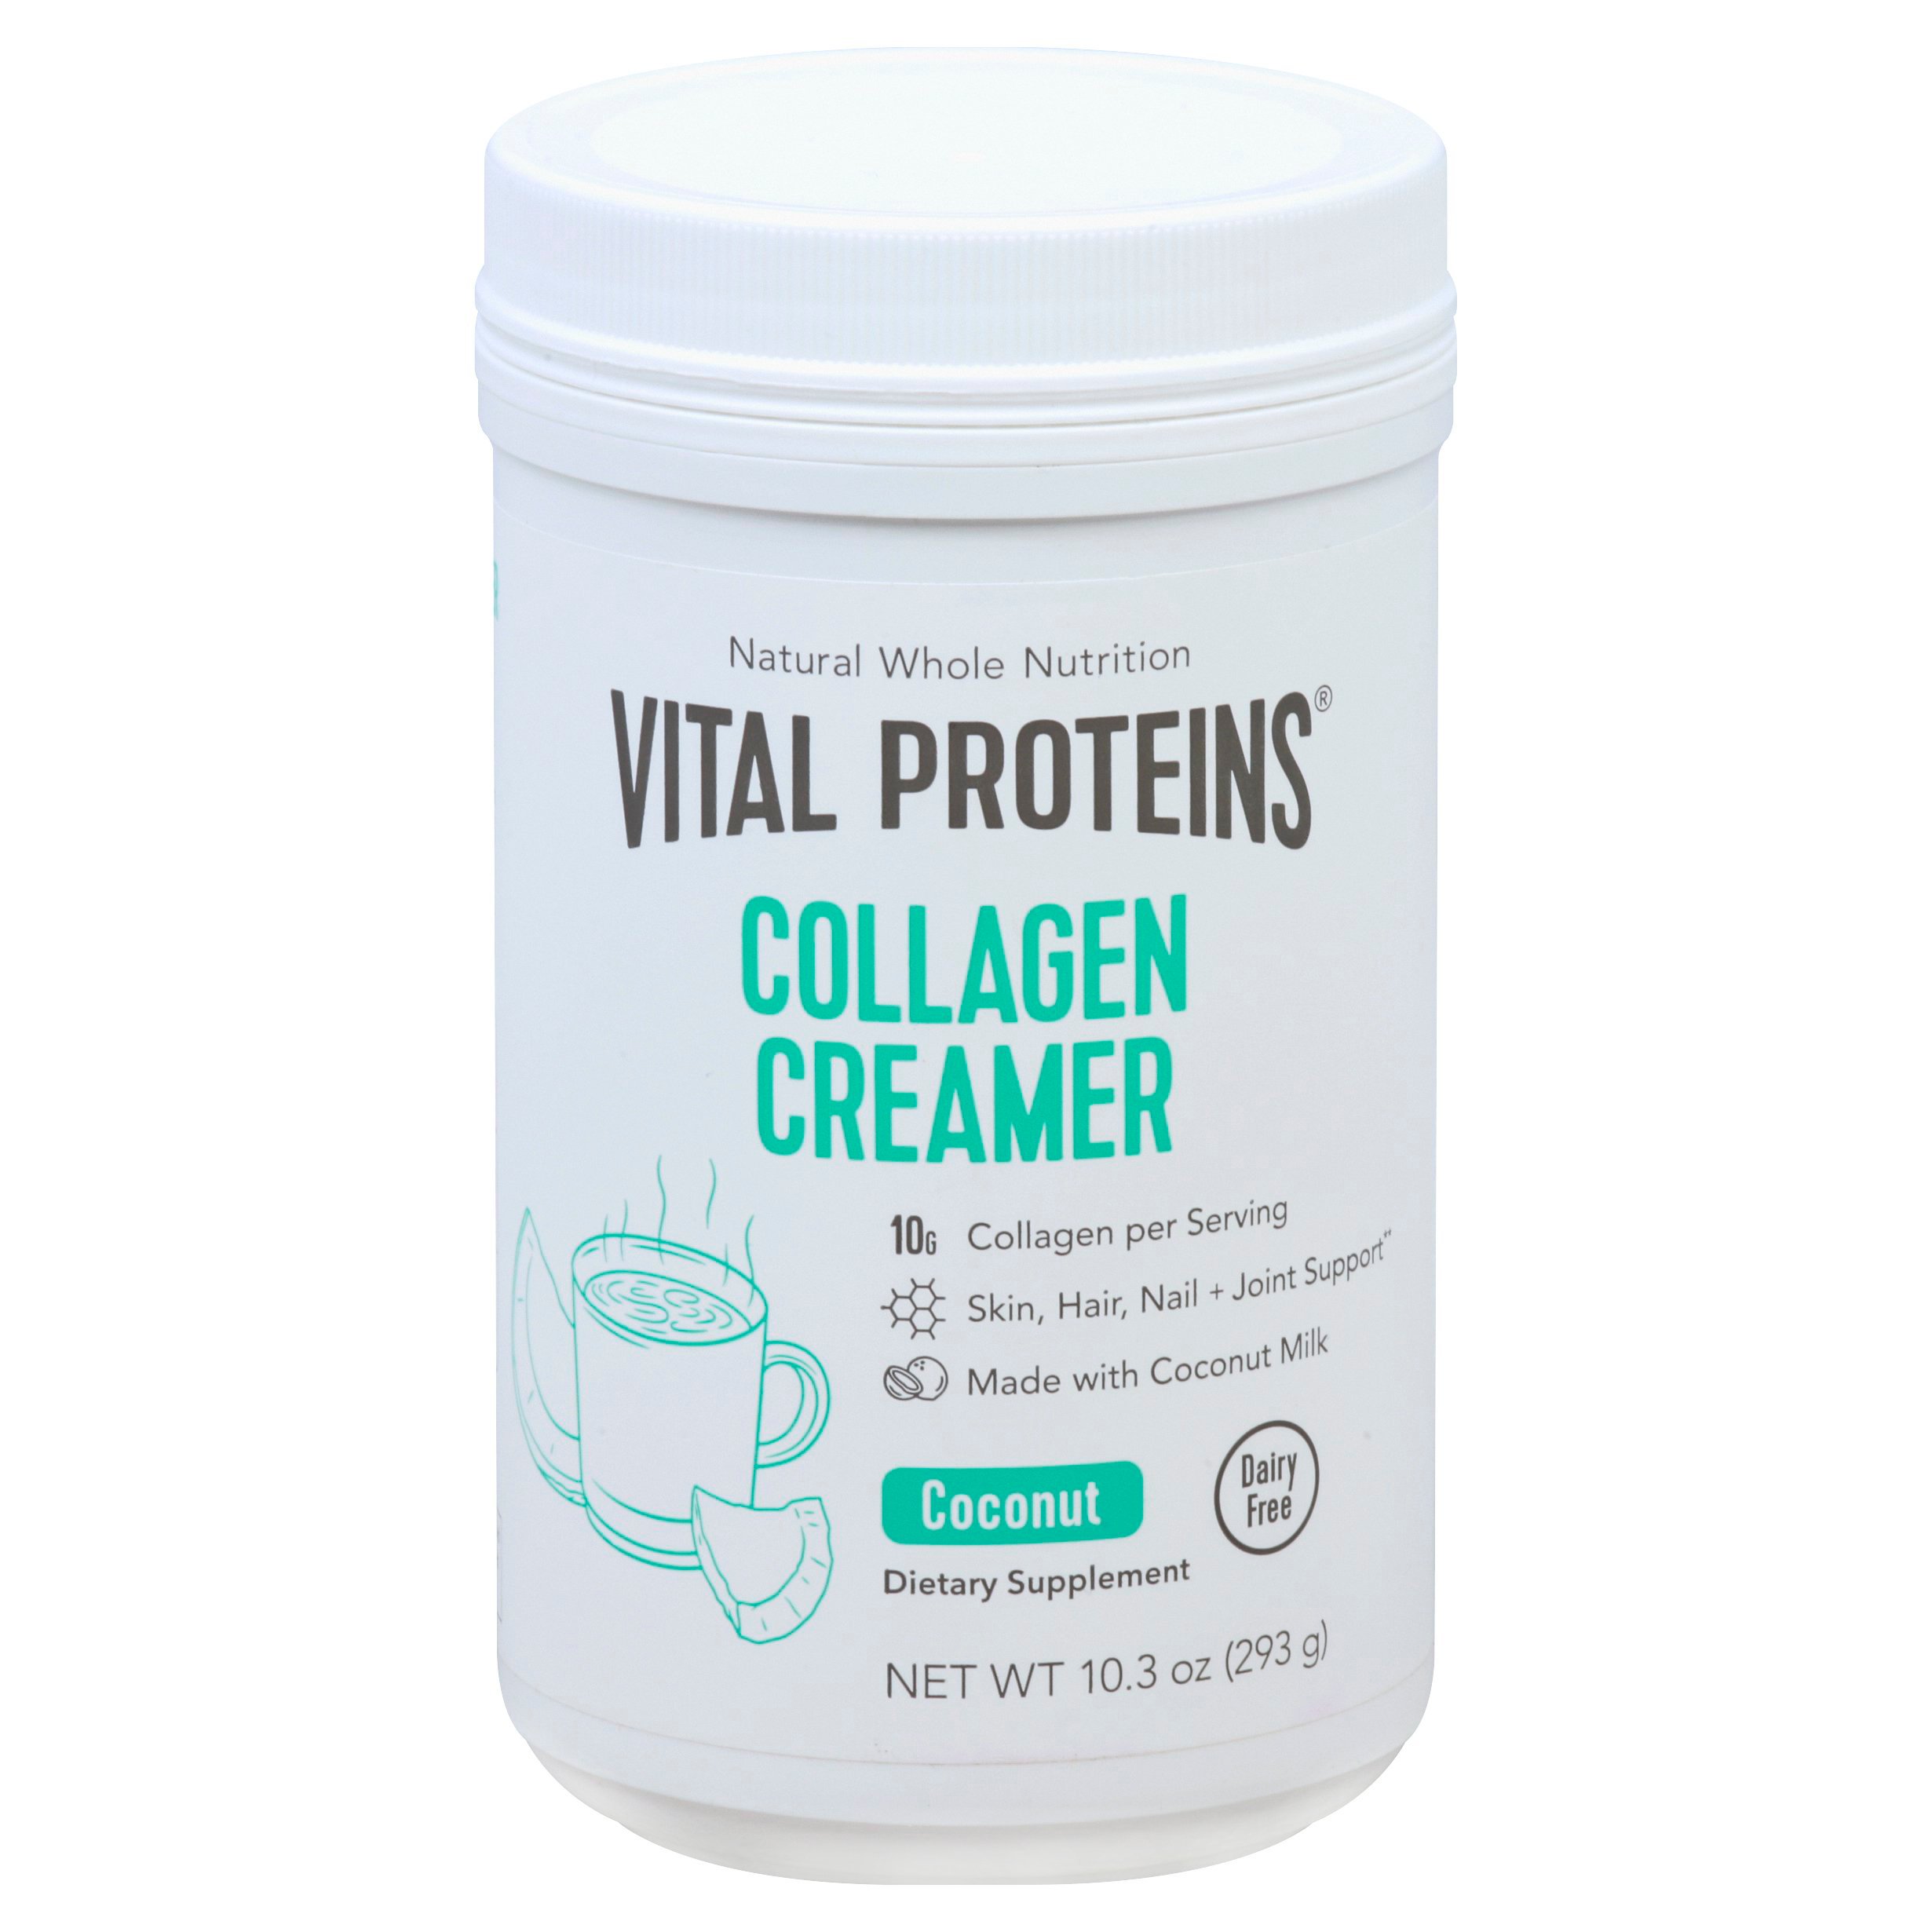 Vital Proteins Collagen Creamer Coconut Shop Diet Fitness At H E B,Granite Kitchen Island Countertop Ideas